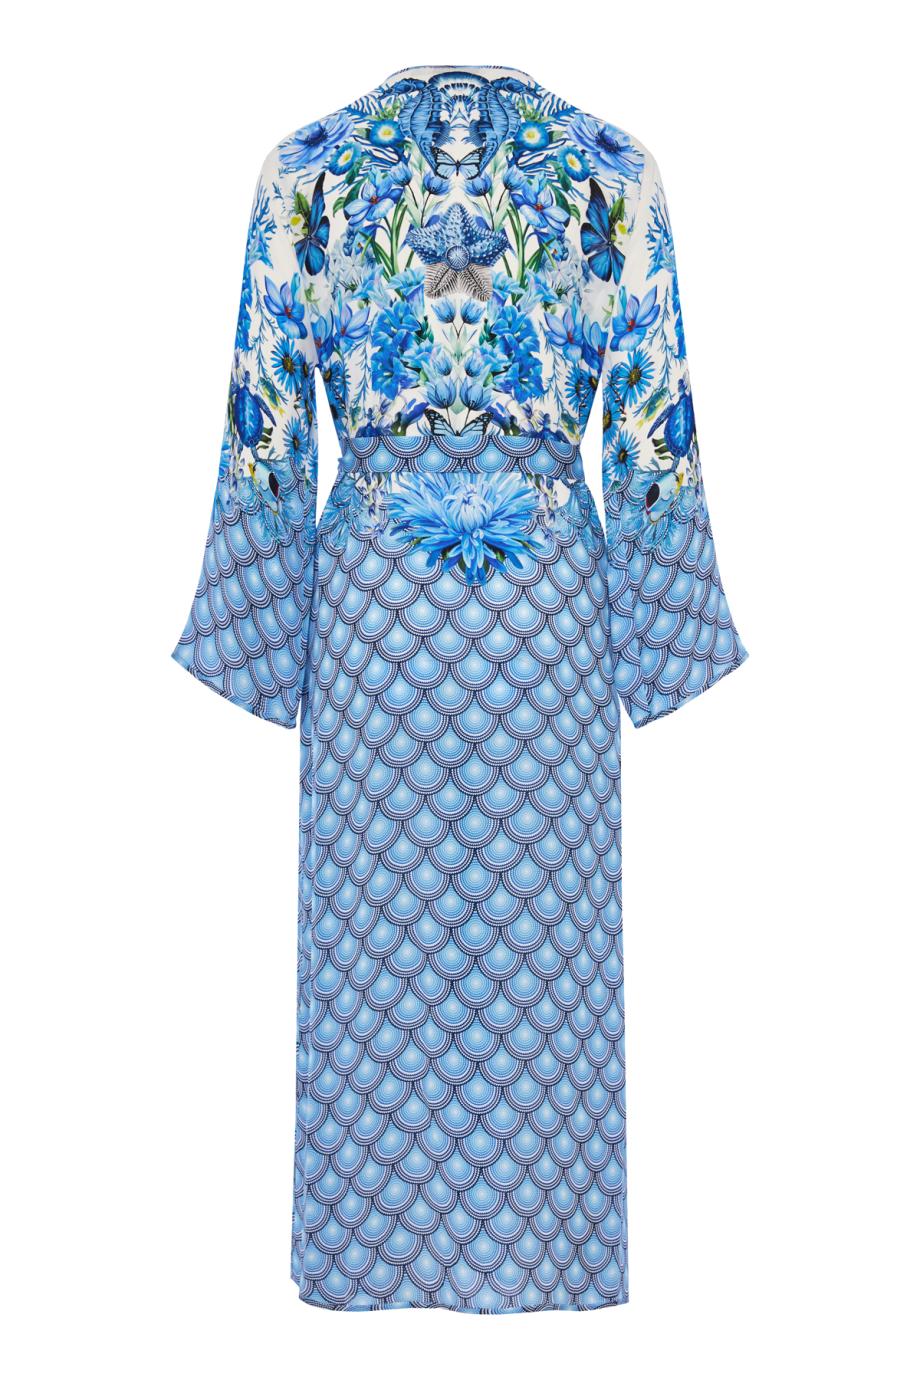 Côte d'Azur printed silk kimono